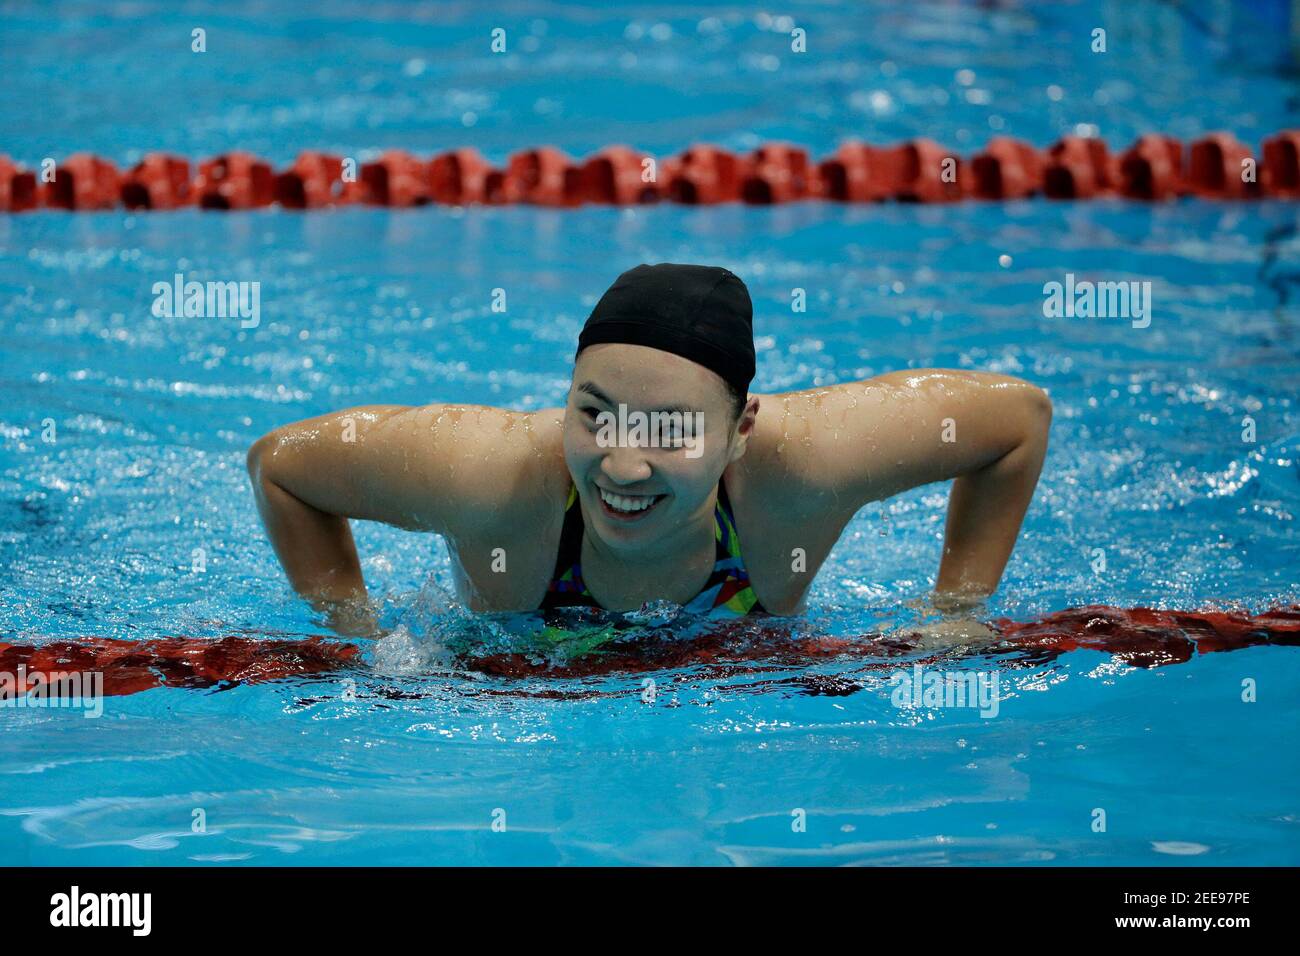 28th SEA Games Singapore 2015 - OCBC Aquatic Centre, Singapore - 10/6/15  Swimming - Women's 50m Butterfly - Heats - Singapore's Ho Ru'en Roanne  after her heat TEAMSINGAPORE Mandatory Credit: Singapore SEA